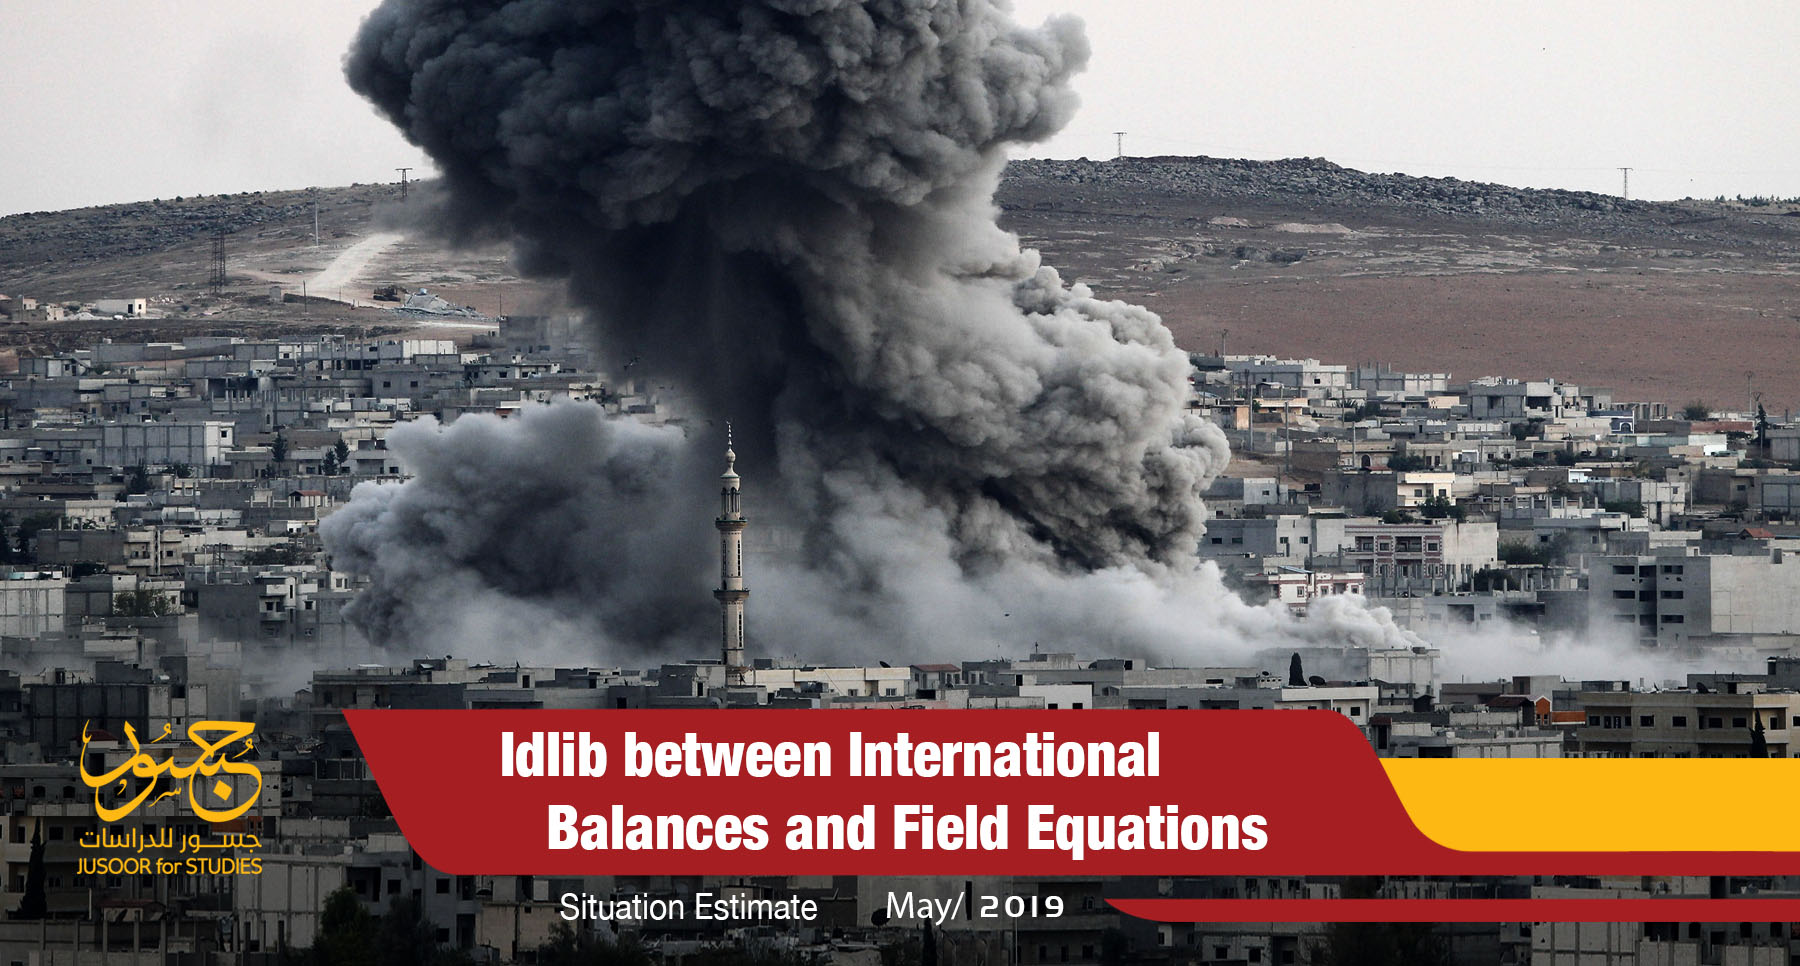 Idlib between International Balances and Field Equations